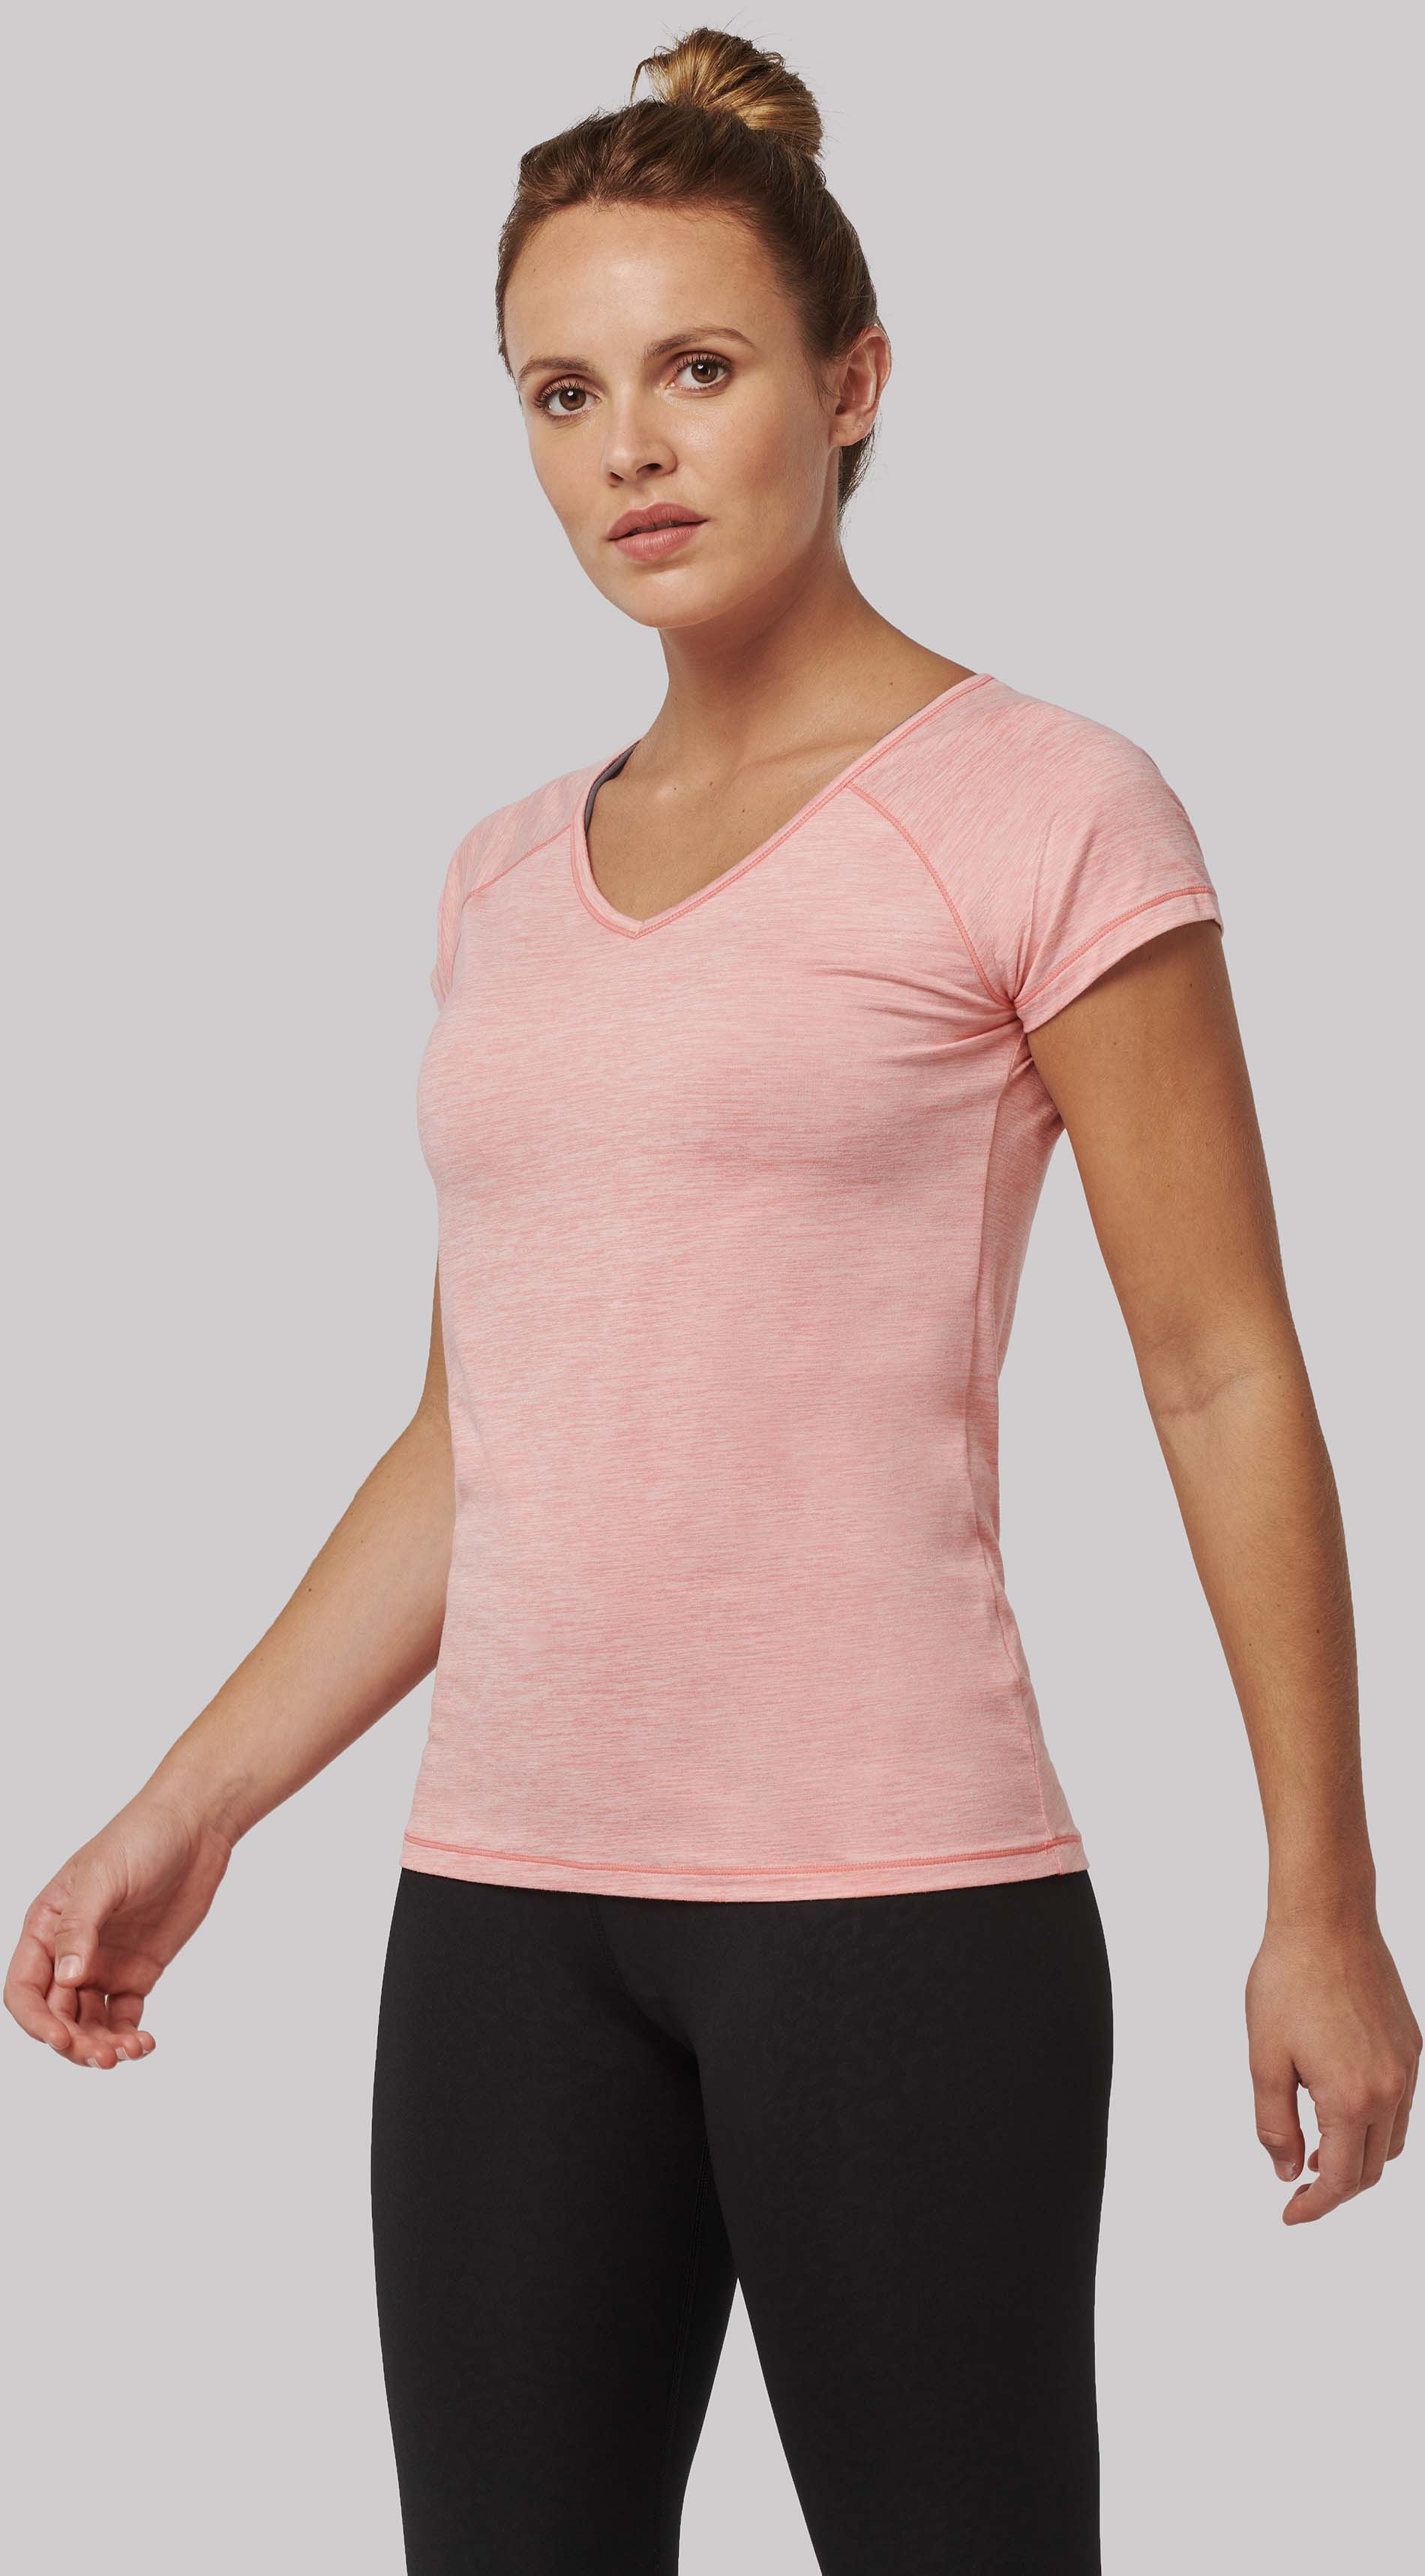 Tee shirt sport pour femme en polyester recyclé